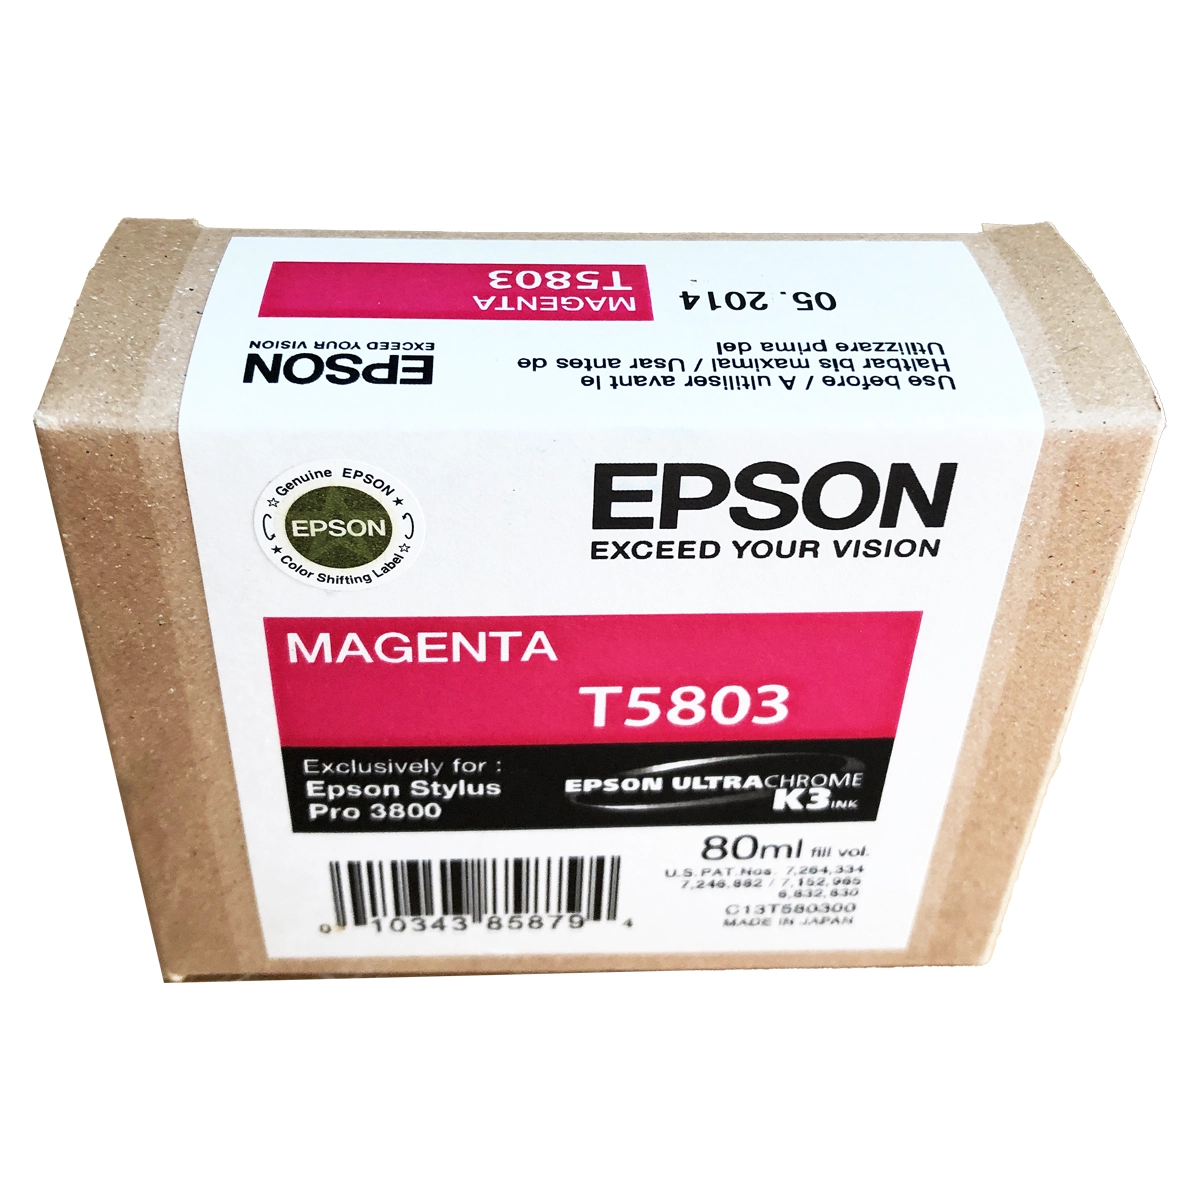 epson stylus photo 3800 magenta ink cartridge new in box2